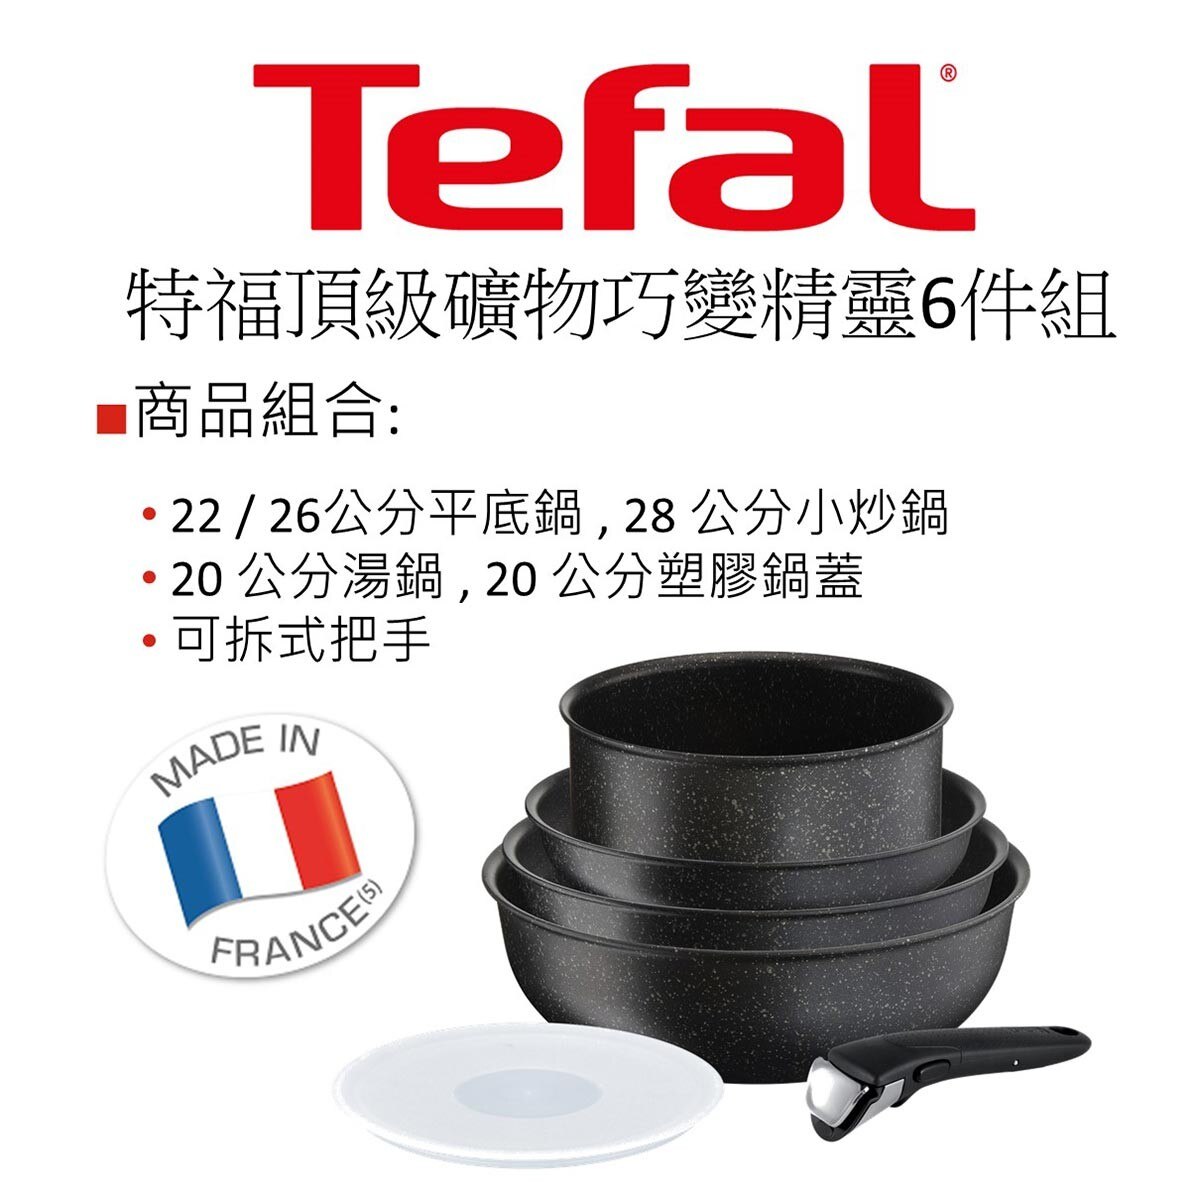 Tefal 頂級礦物巧變精靈系列 鍋具6件組，特福獨家研發的Thermo-Spot®佳溫紅心 溫度感測技術，當加熱達180度即變色，掌握最佳下鍋時機，料理多汁美味的秘密武器。